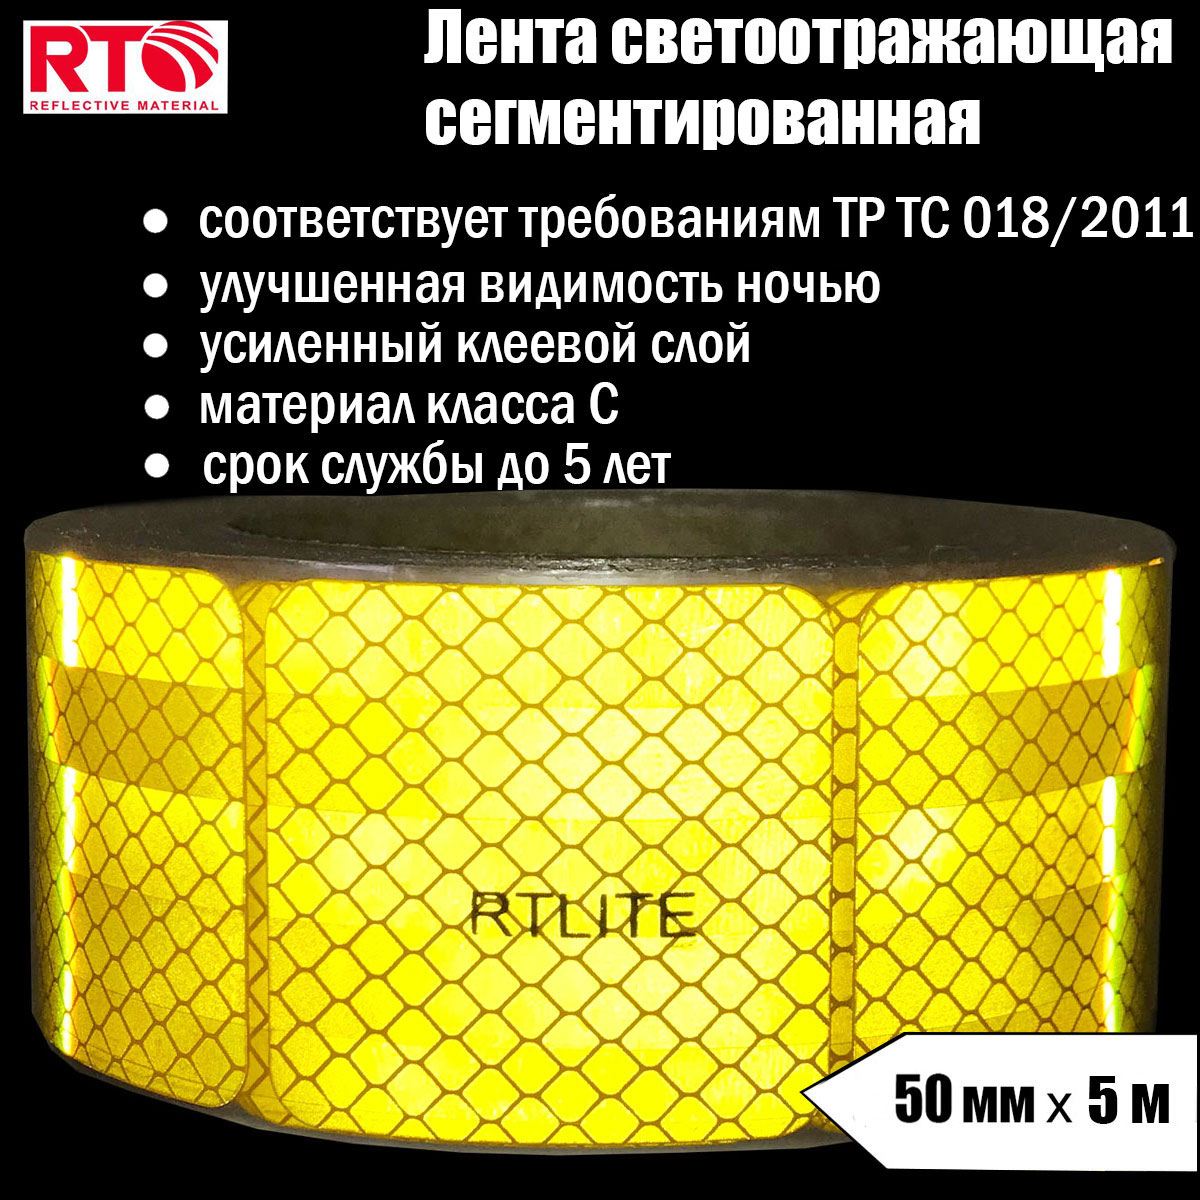 Лента светоотражающая сегментированная RTLITE RT-V104 для контурной маркировки, 50мм х 5м лента светоотражающая для контурной маркировки rtlite rt v104 50 8 мм х 10 м желтая